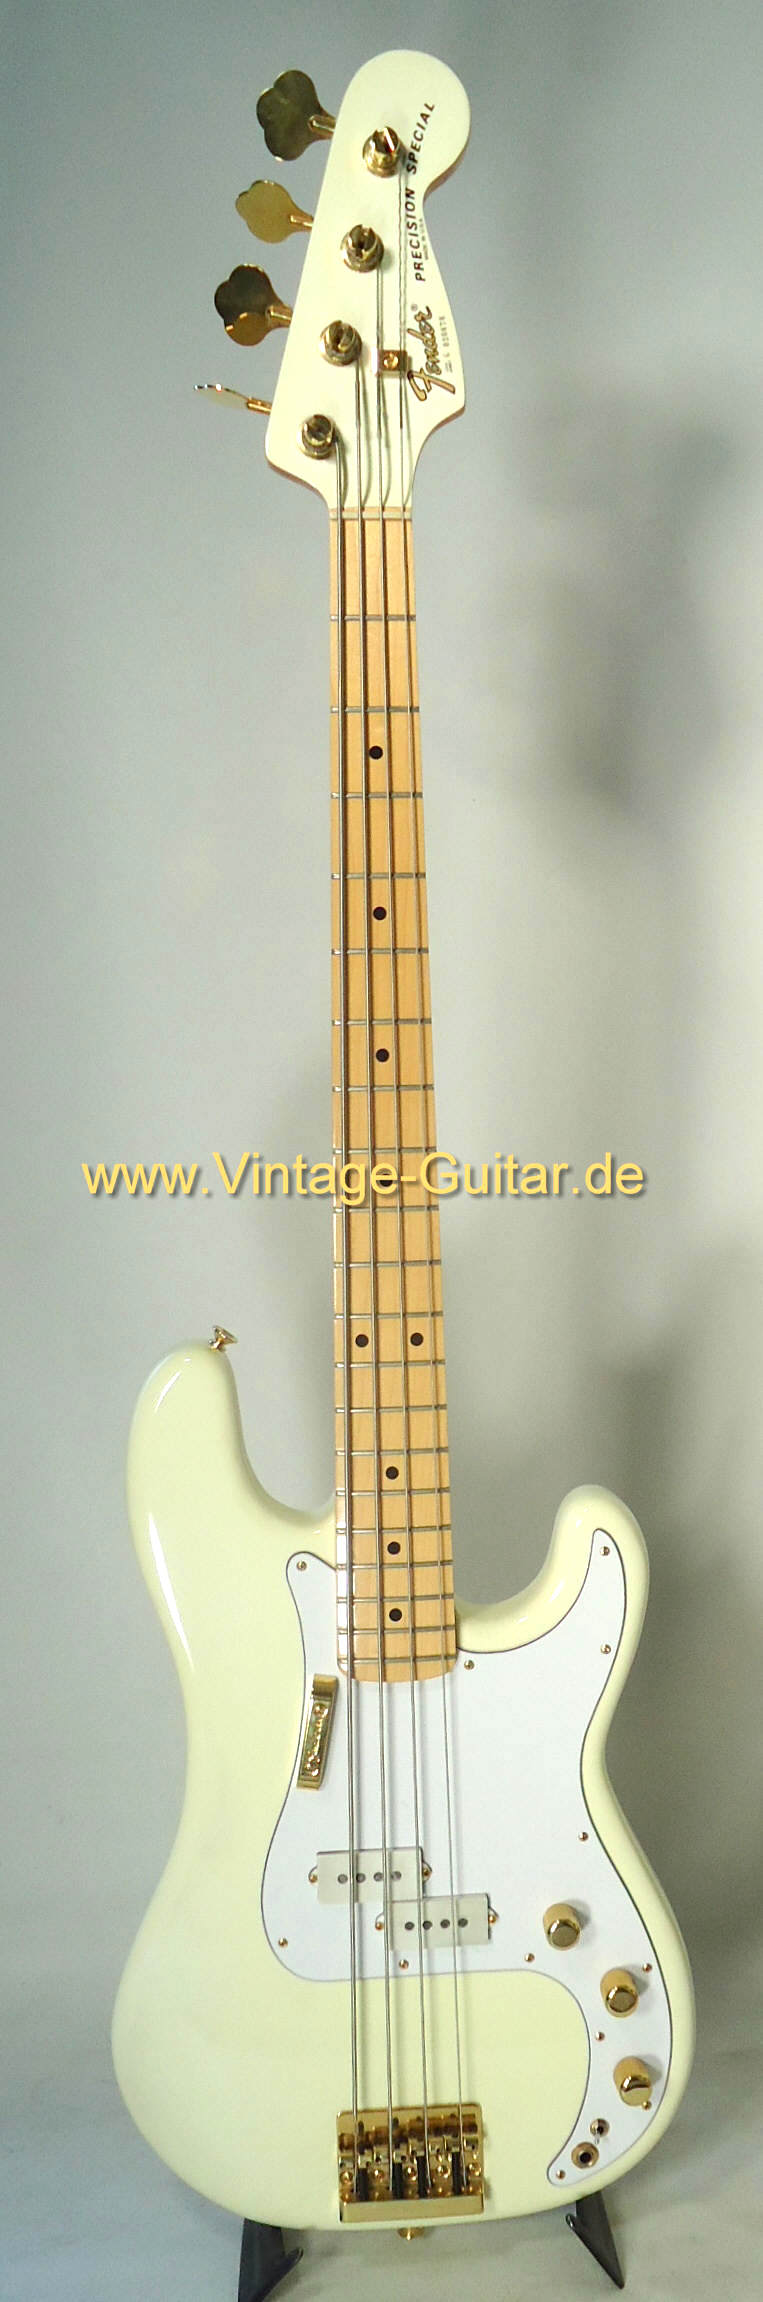 www.vintage-guitar.de